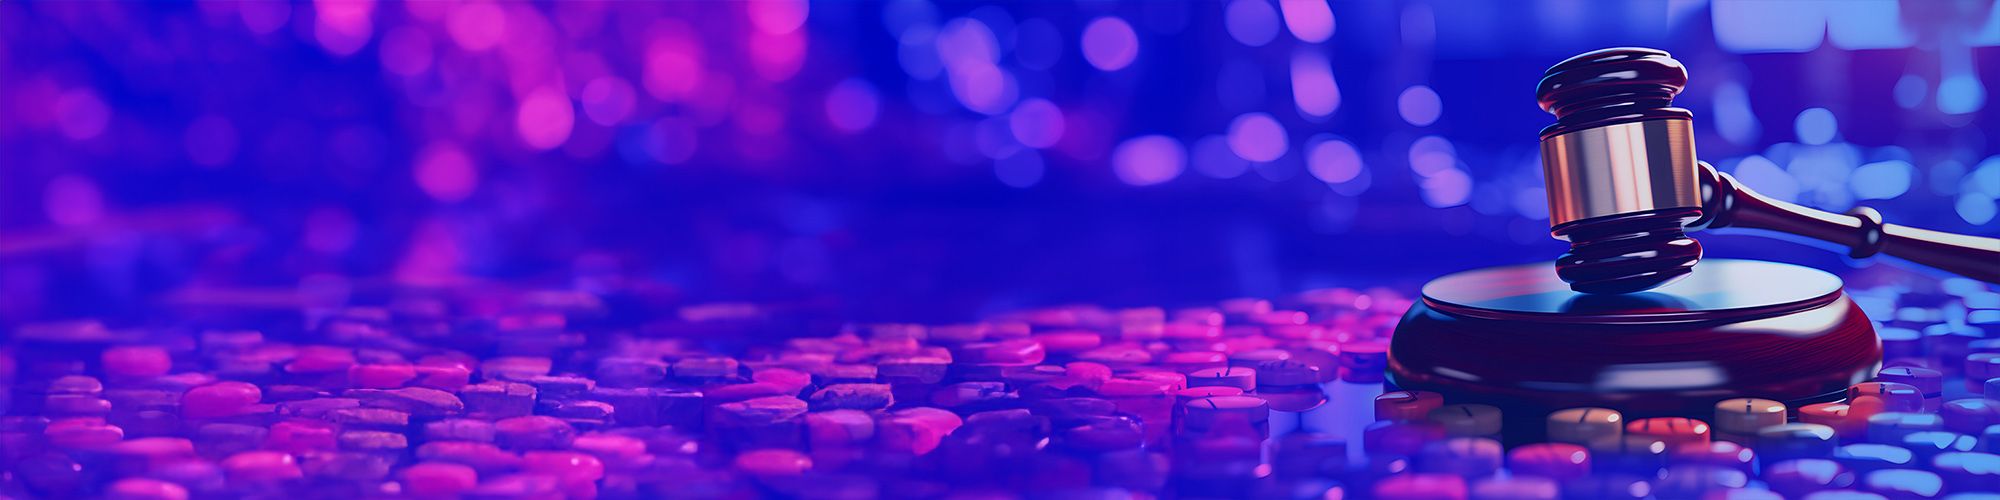 Navigating the new regulatory terrain - Uniform Code of Pharmaceuticals Marketing Practices: What lies ahead?